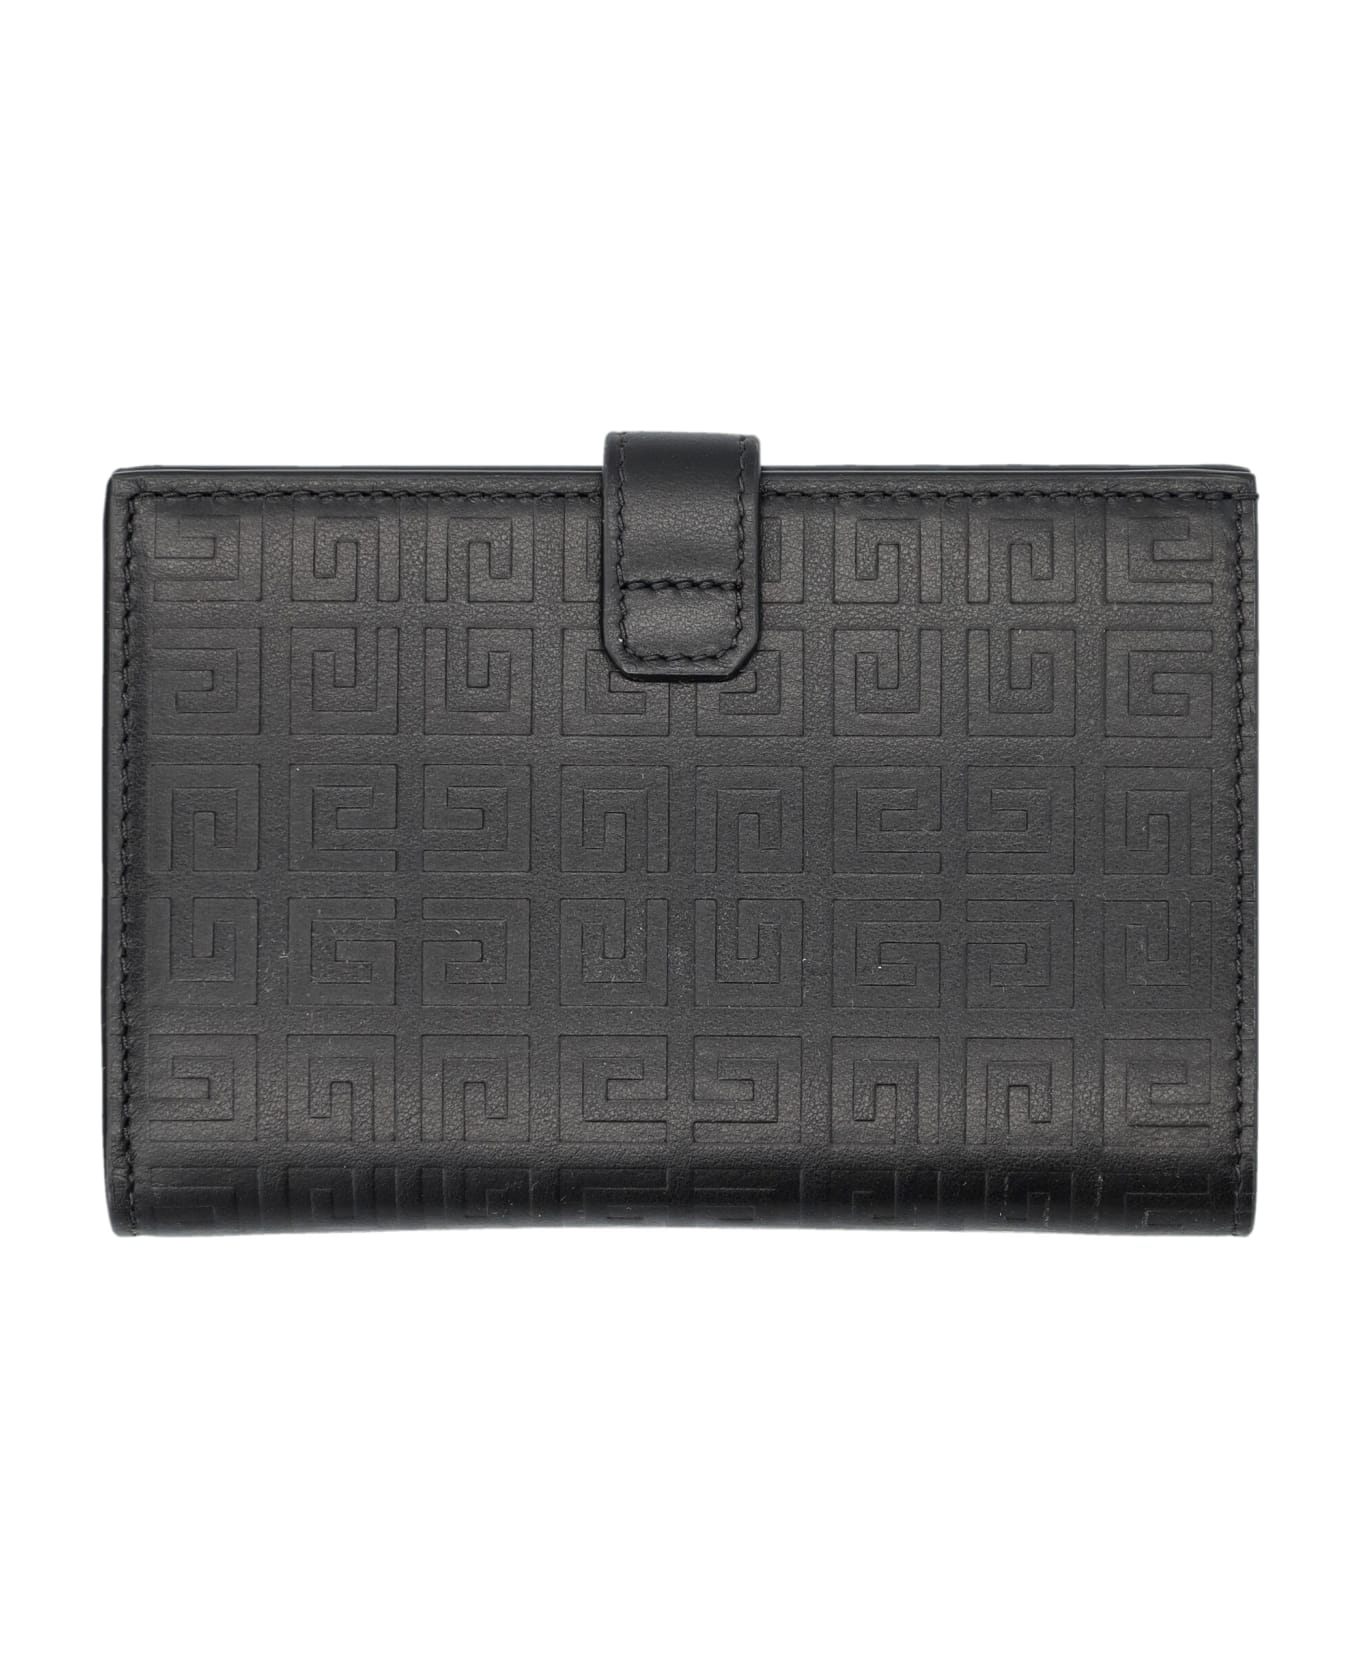 Givenchy G-cut Medium Bifold Wallet - BLACK